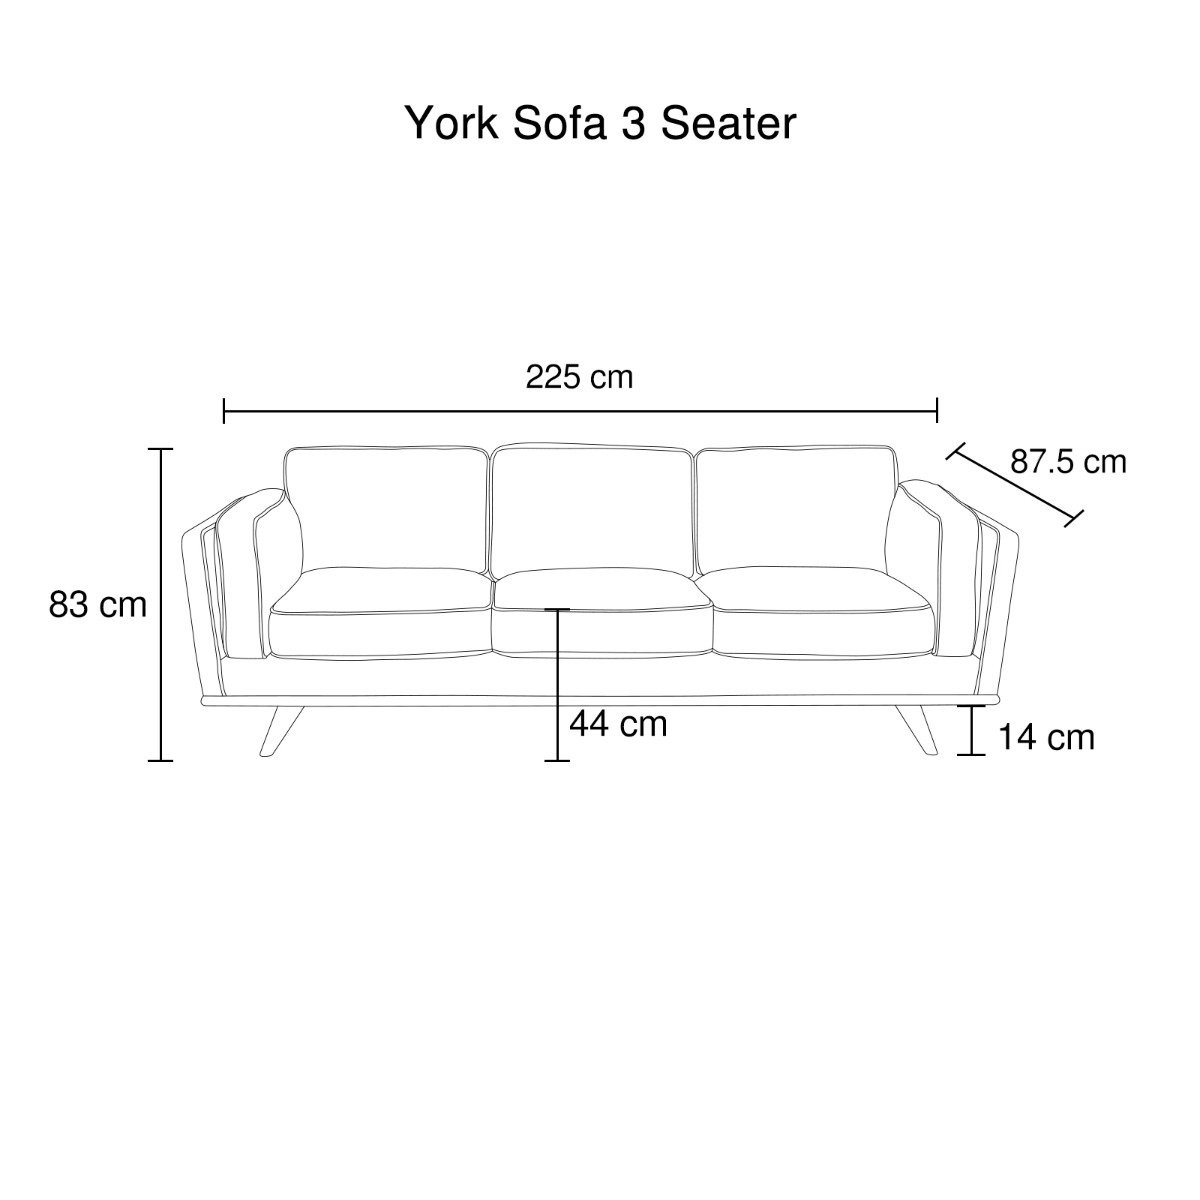 Fatherday-furniture York Sofa 3 Seater Teal